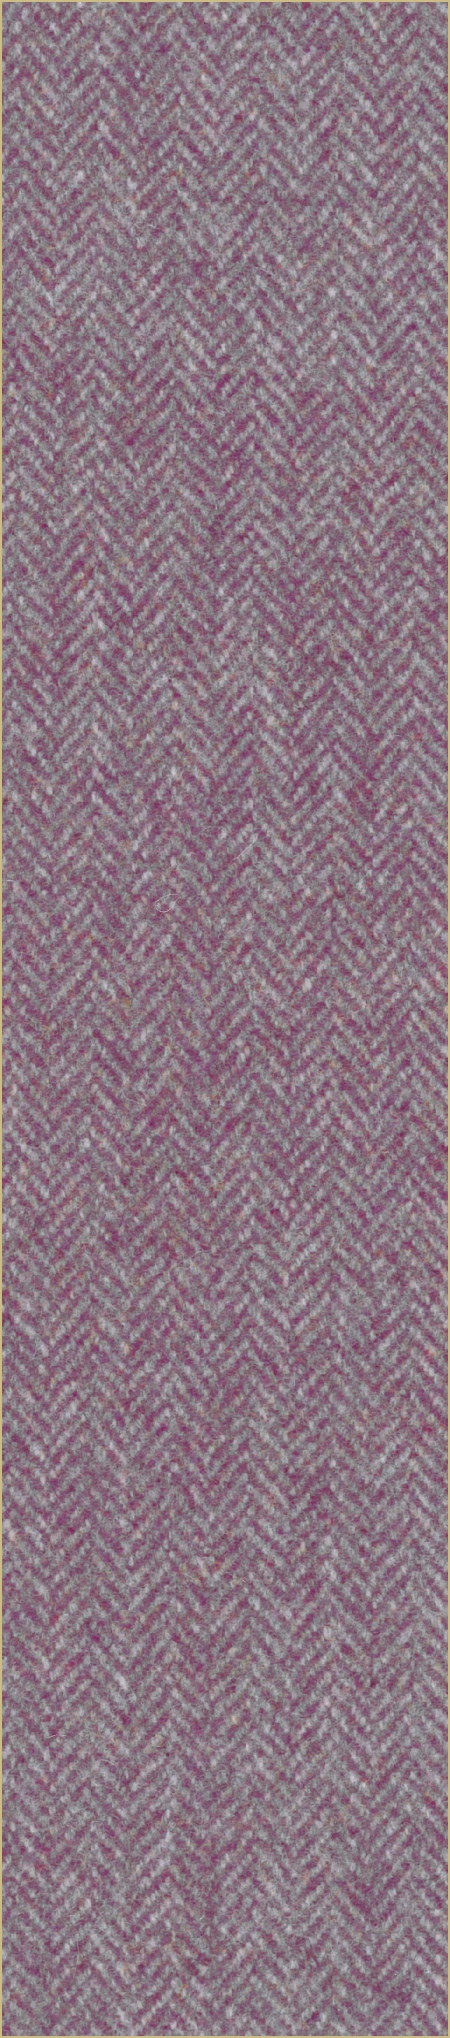 Cotswold Woollen Weavers' Upholstery Cloth